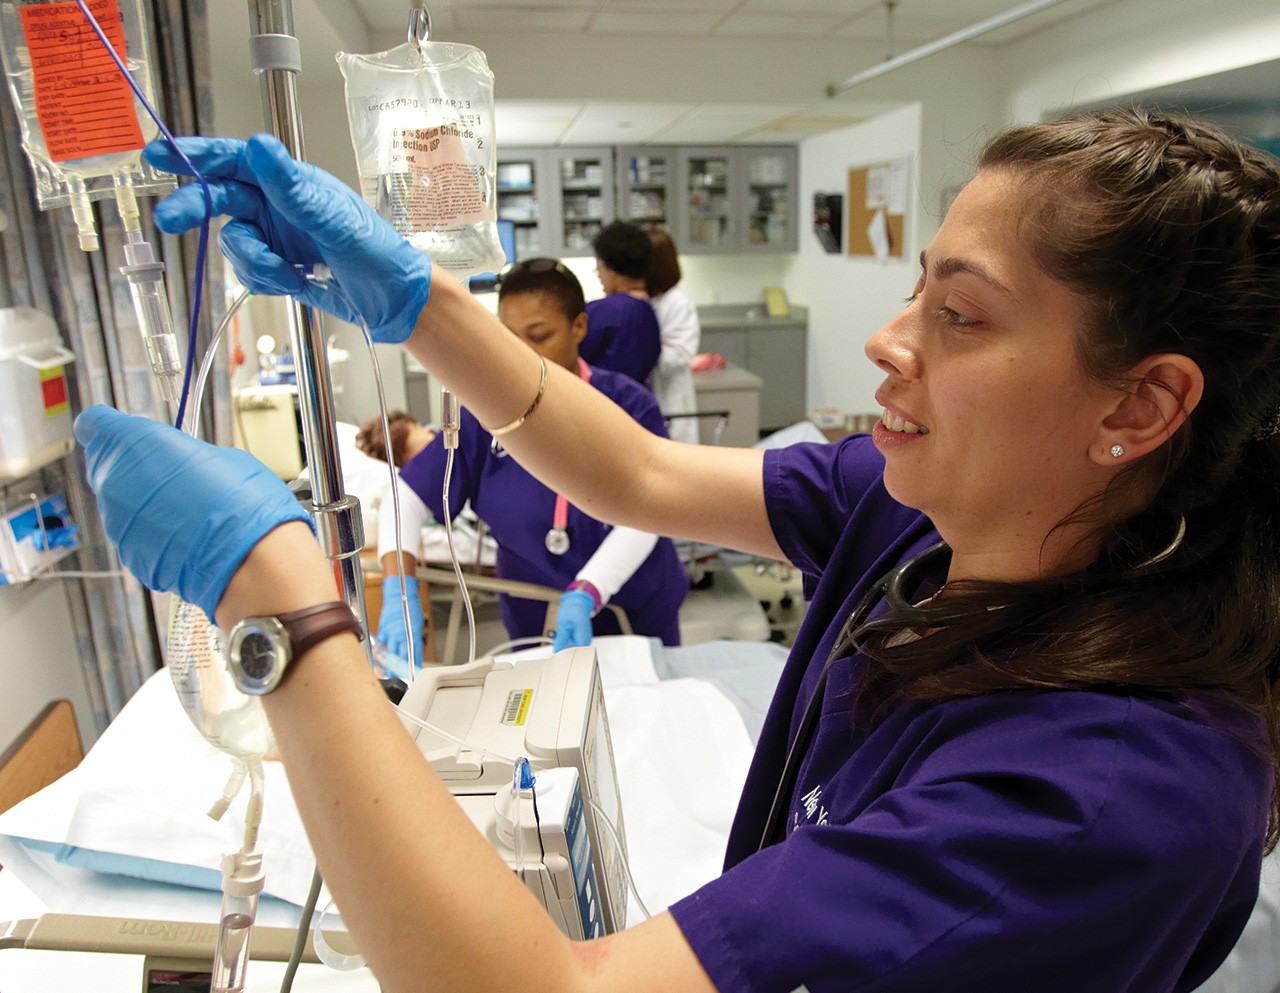 A nursing student administrating an IV drip.